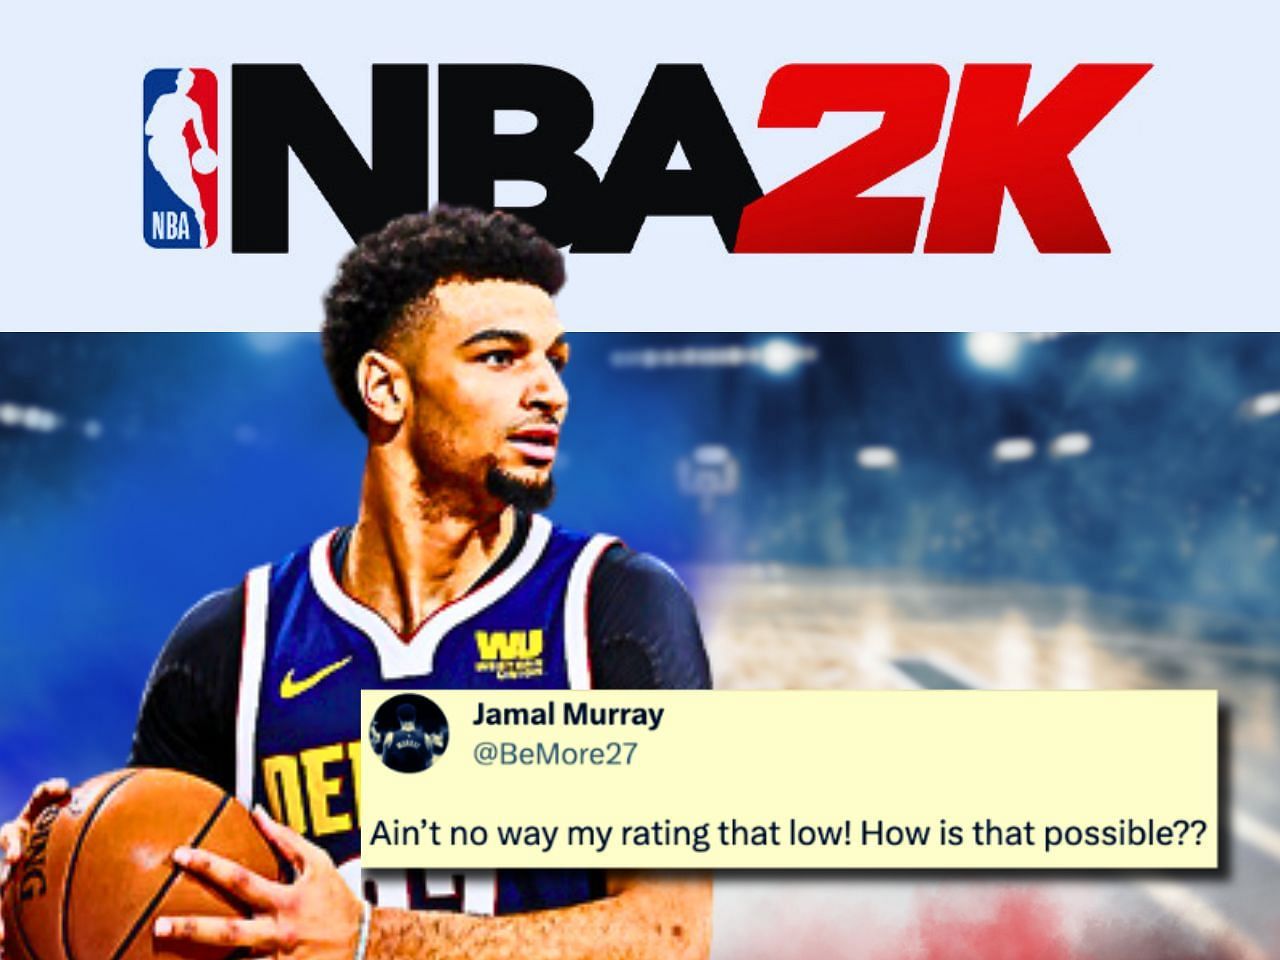 Jamal Murray reacts to his NBA 2K24 rating.